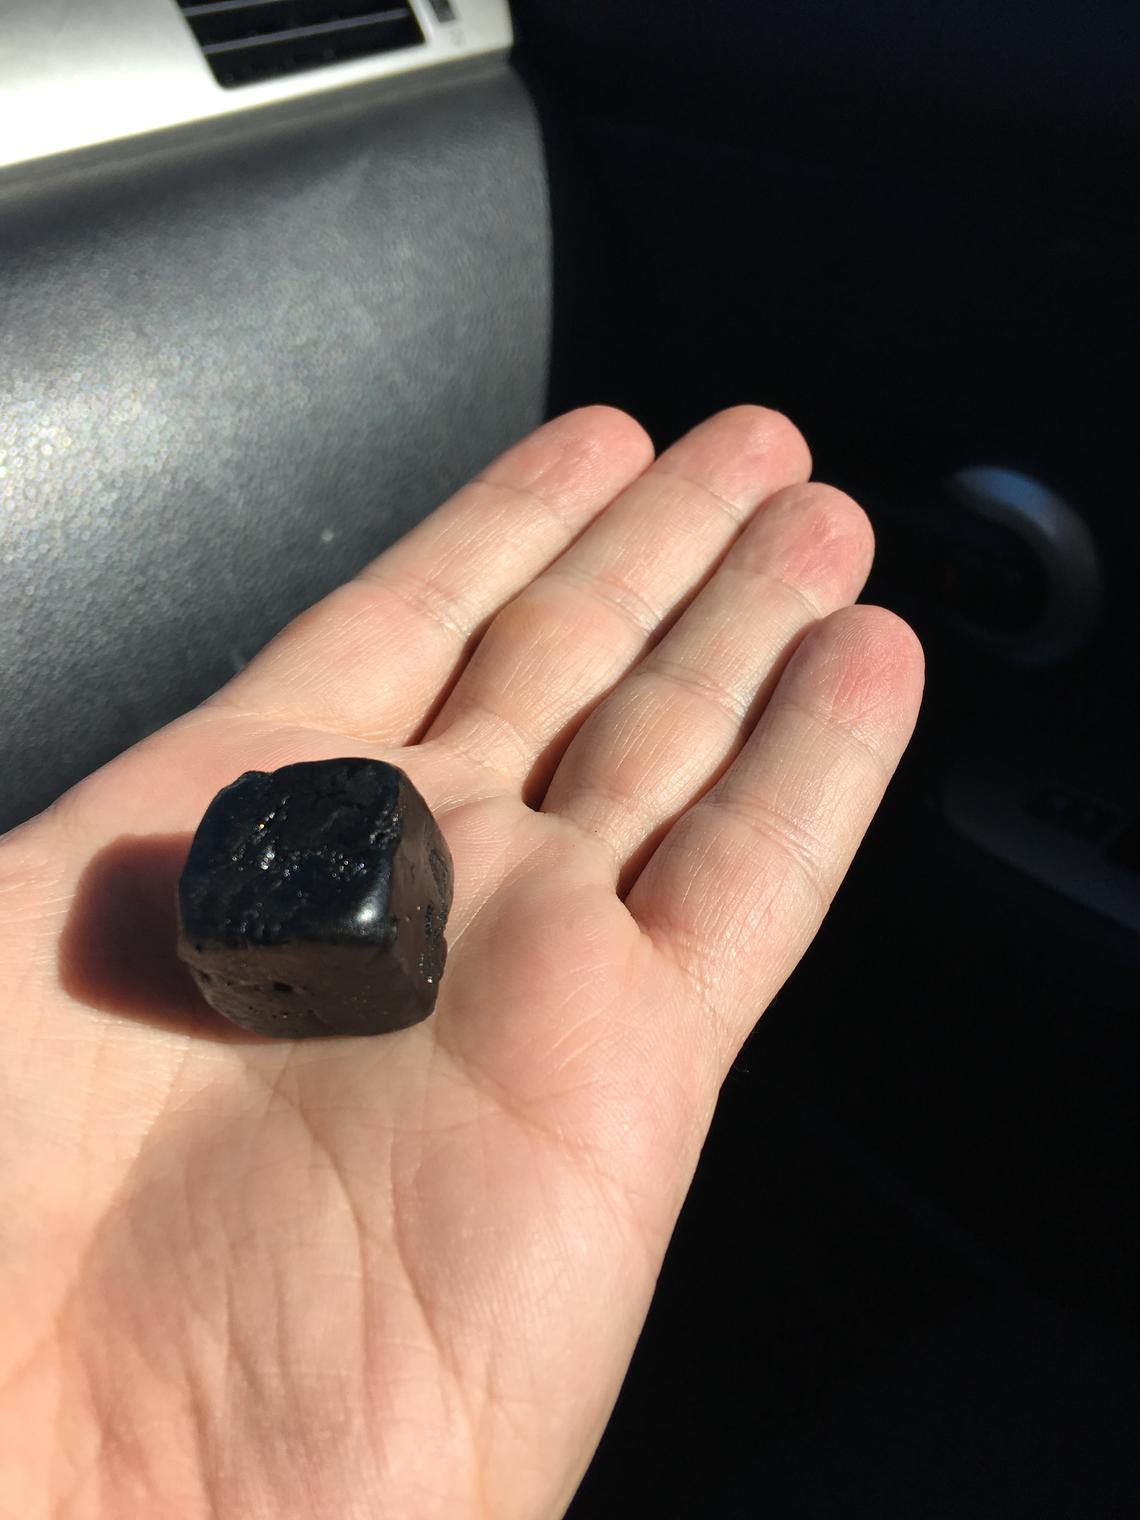 Bitumen balls can range from golf ball- to pill-size. 